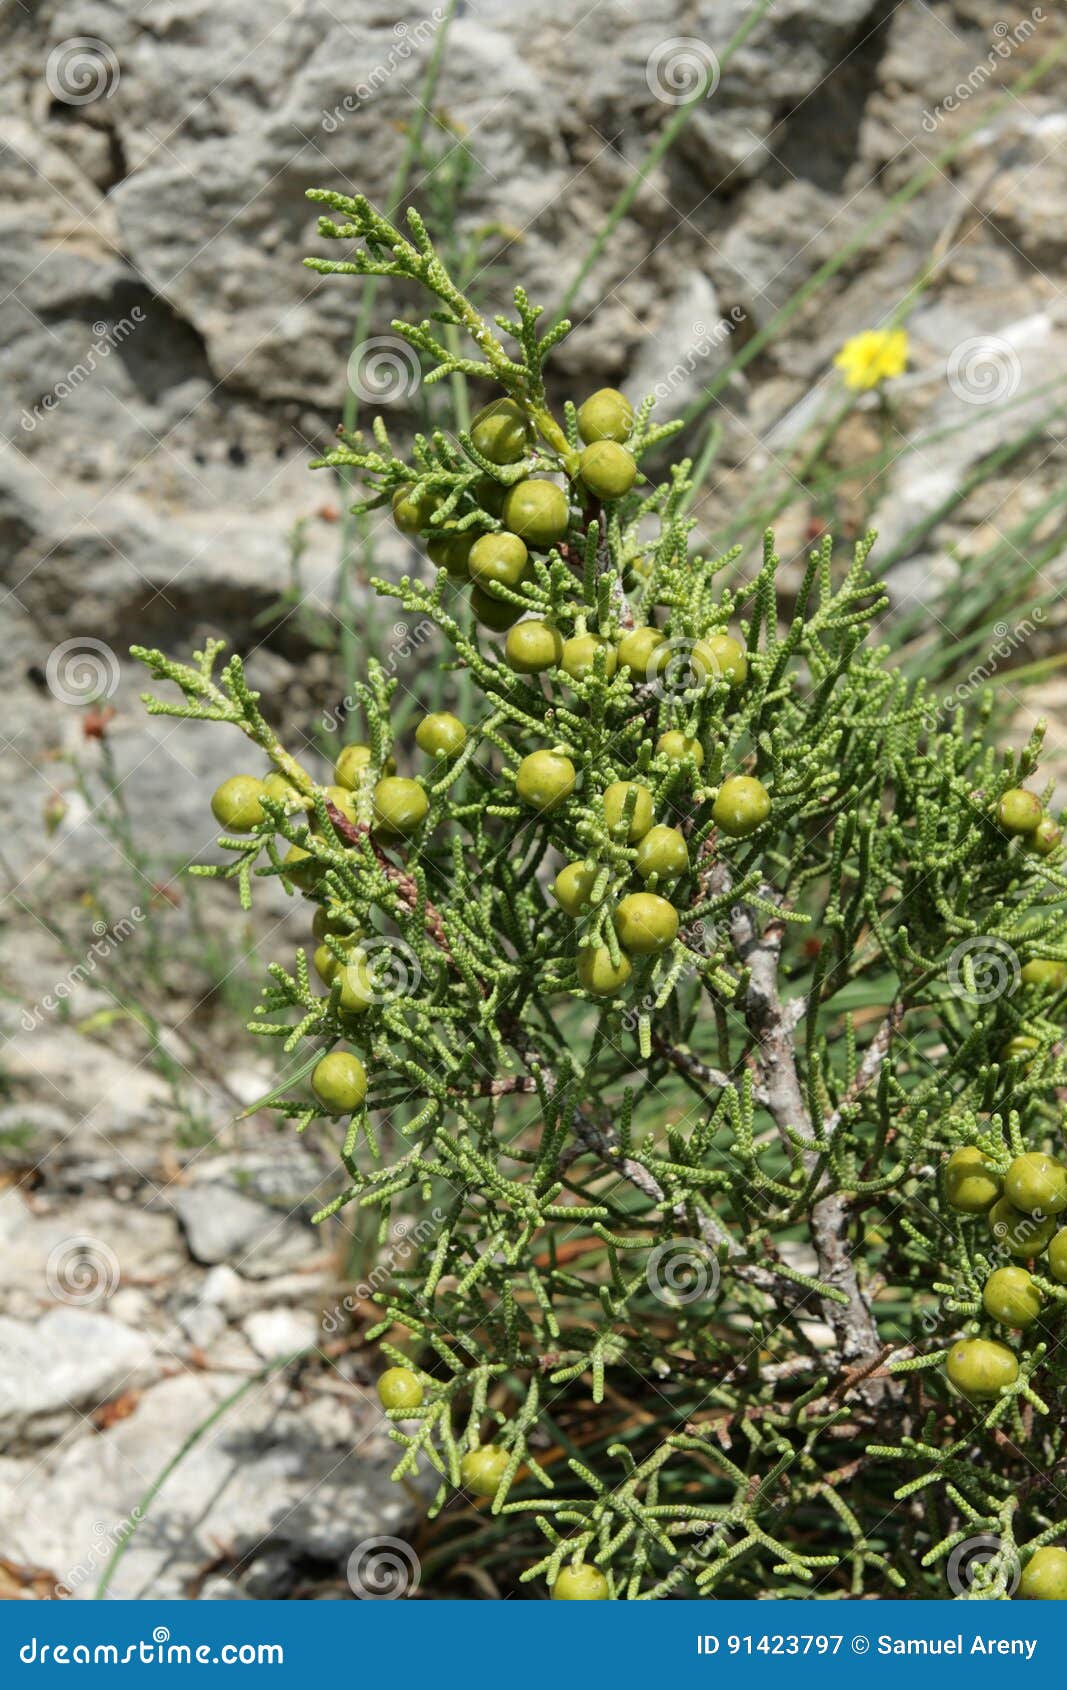 berries of phoenicean juniper or arar